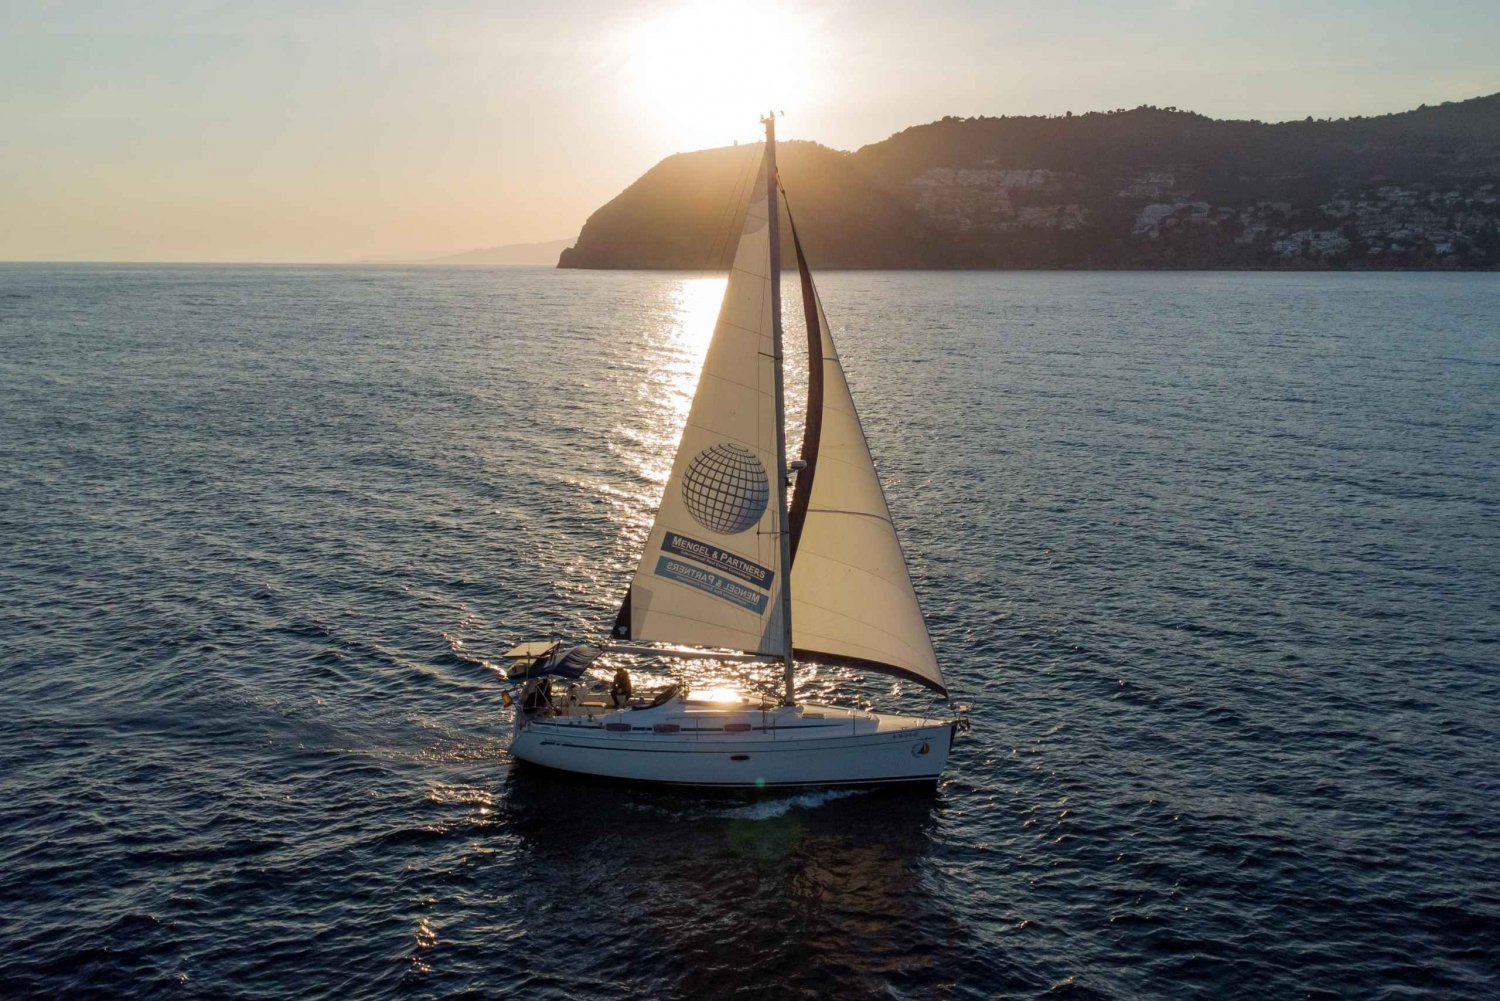 La Herradura-Maro-Nerja: Sailing at Sunset